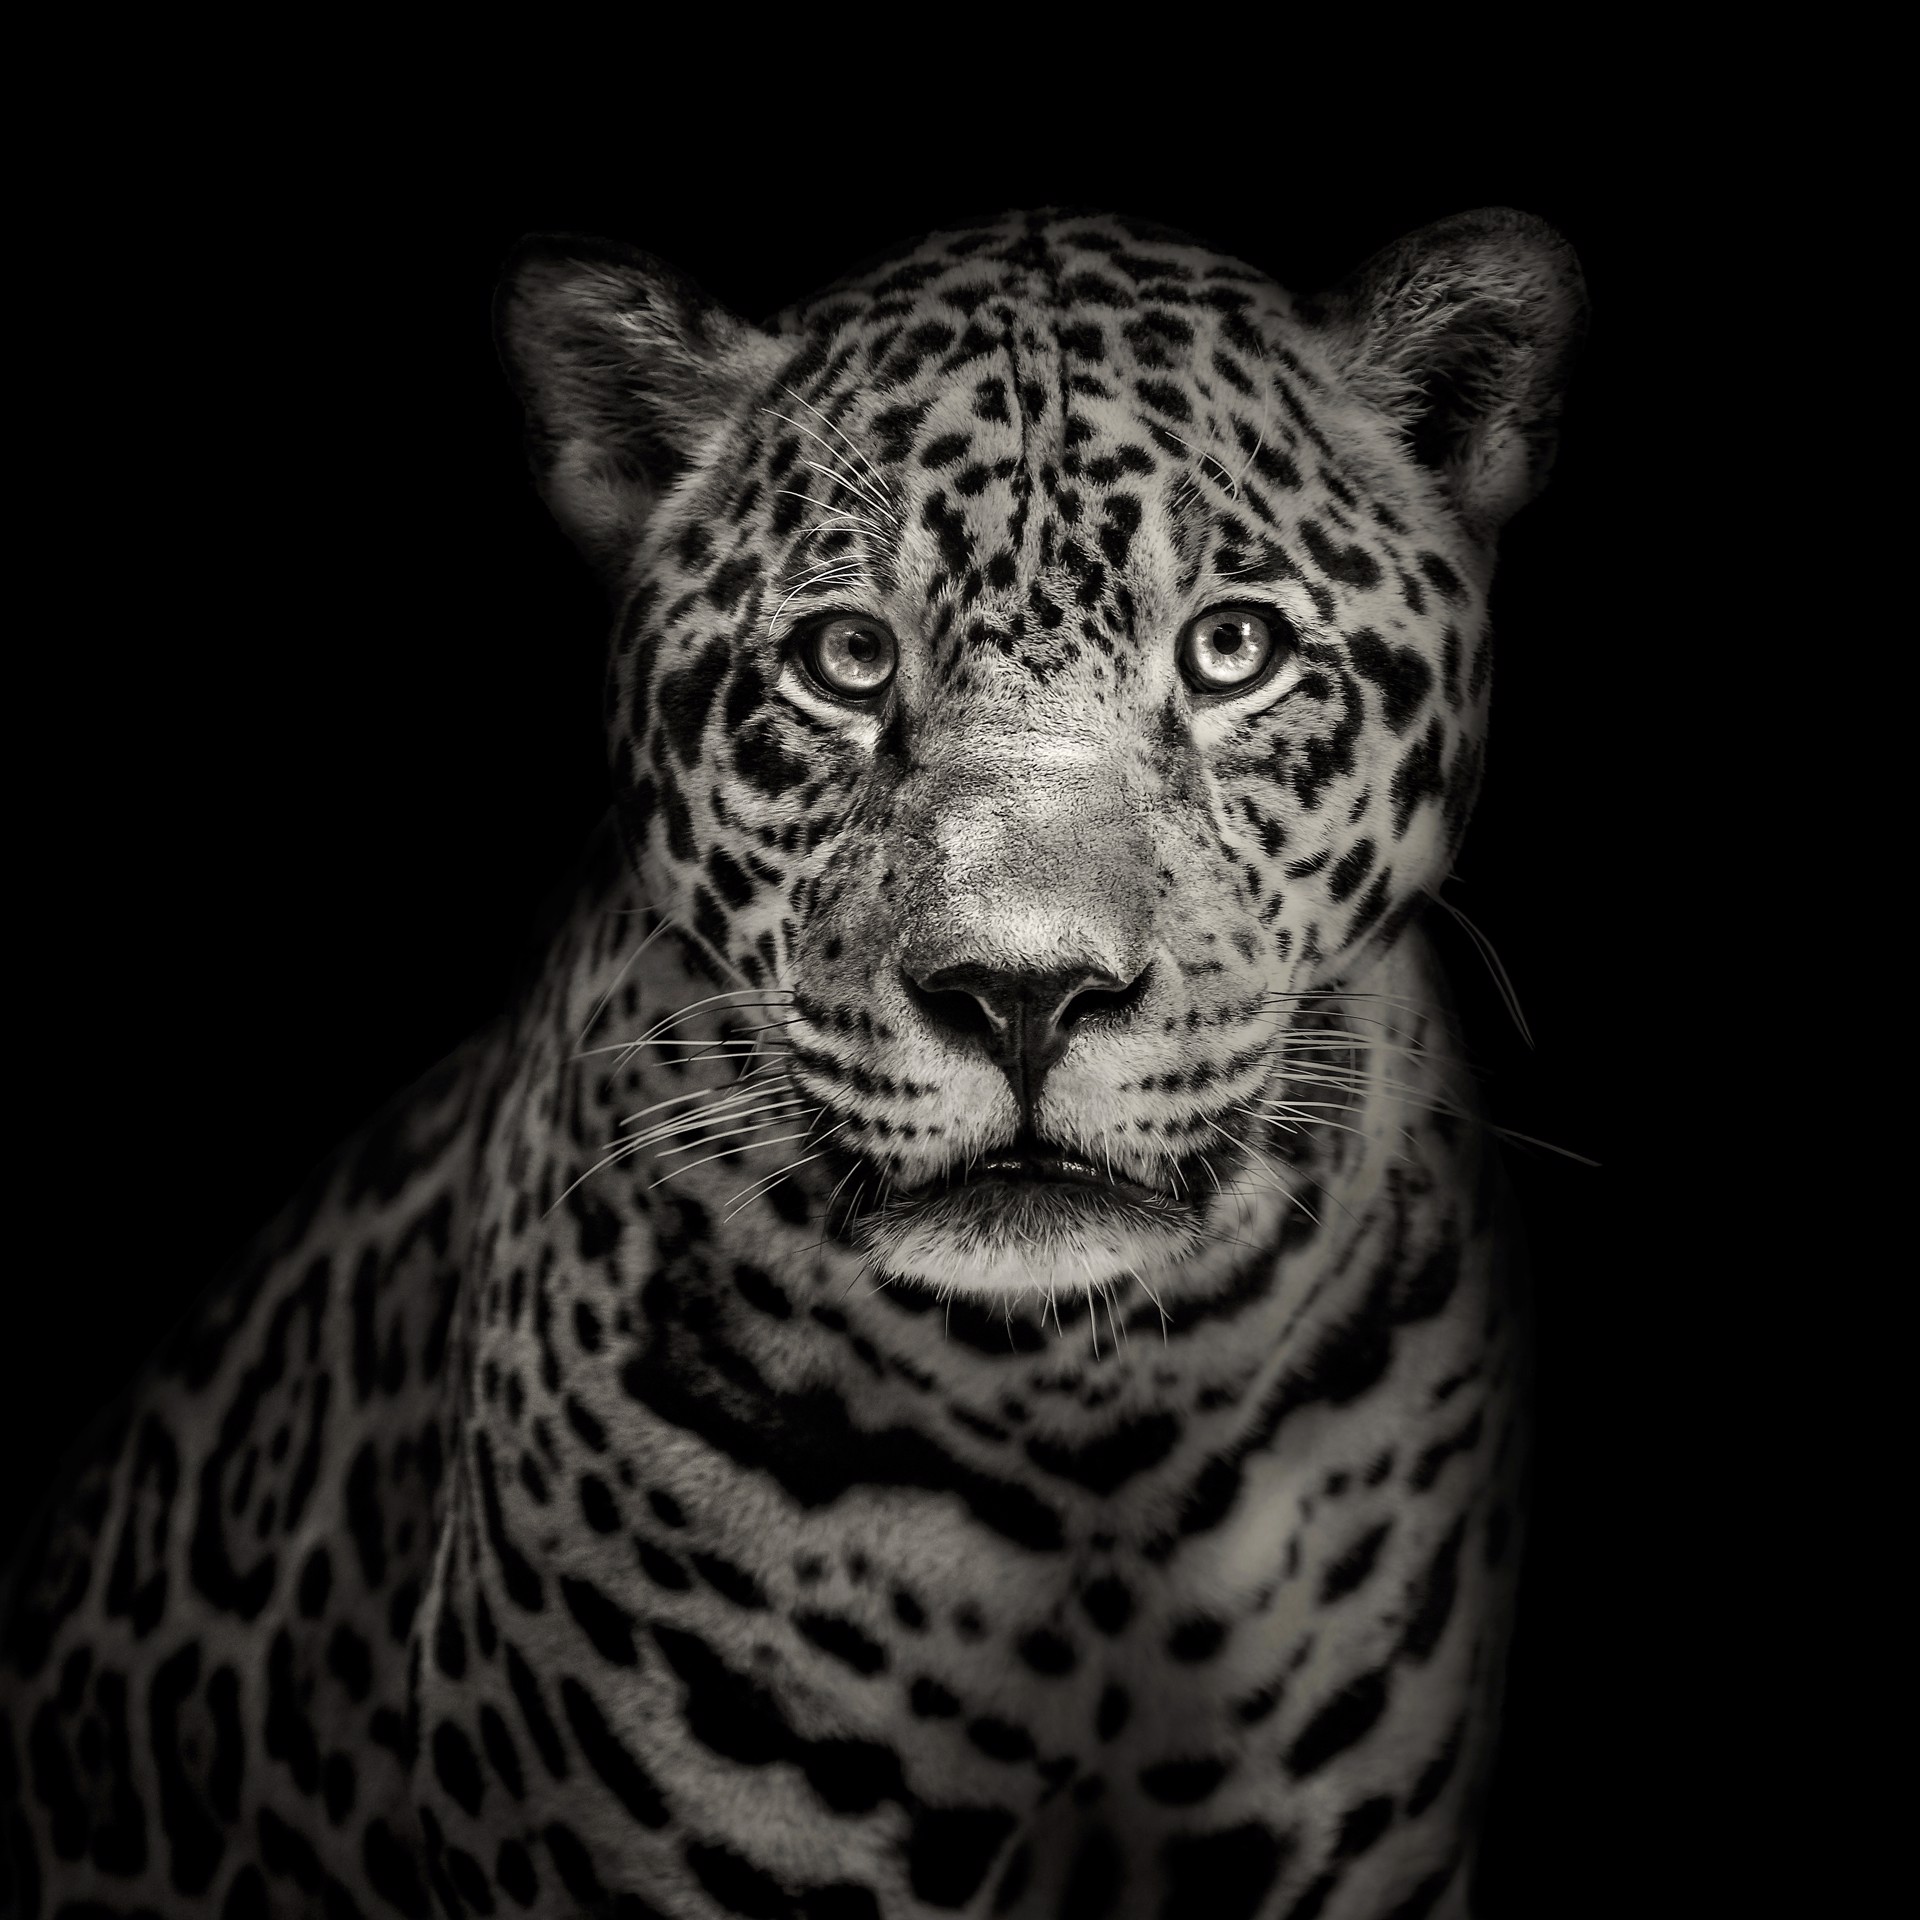 Portrait of Jaguar by Lauren Chambers